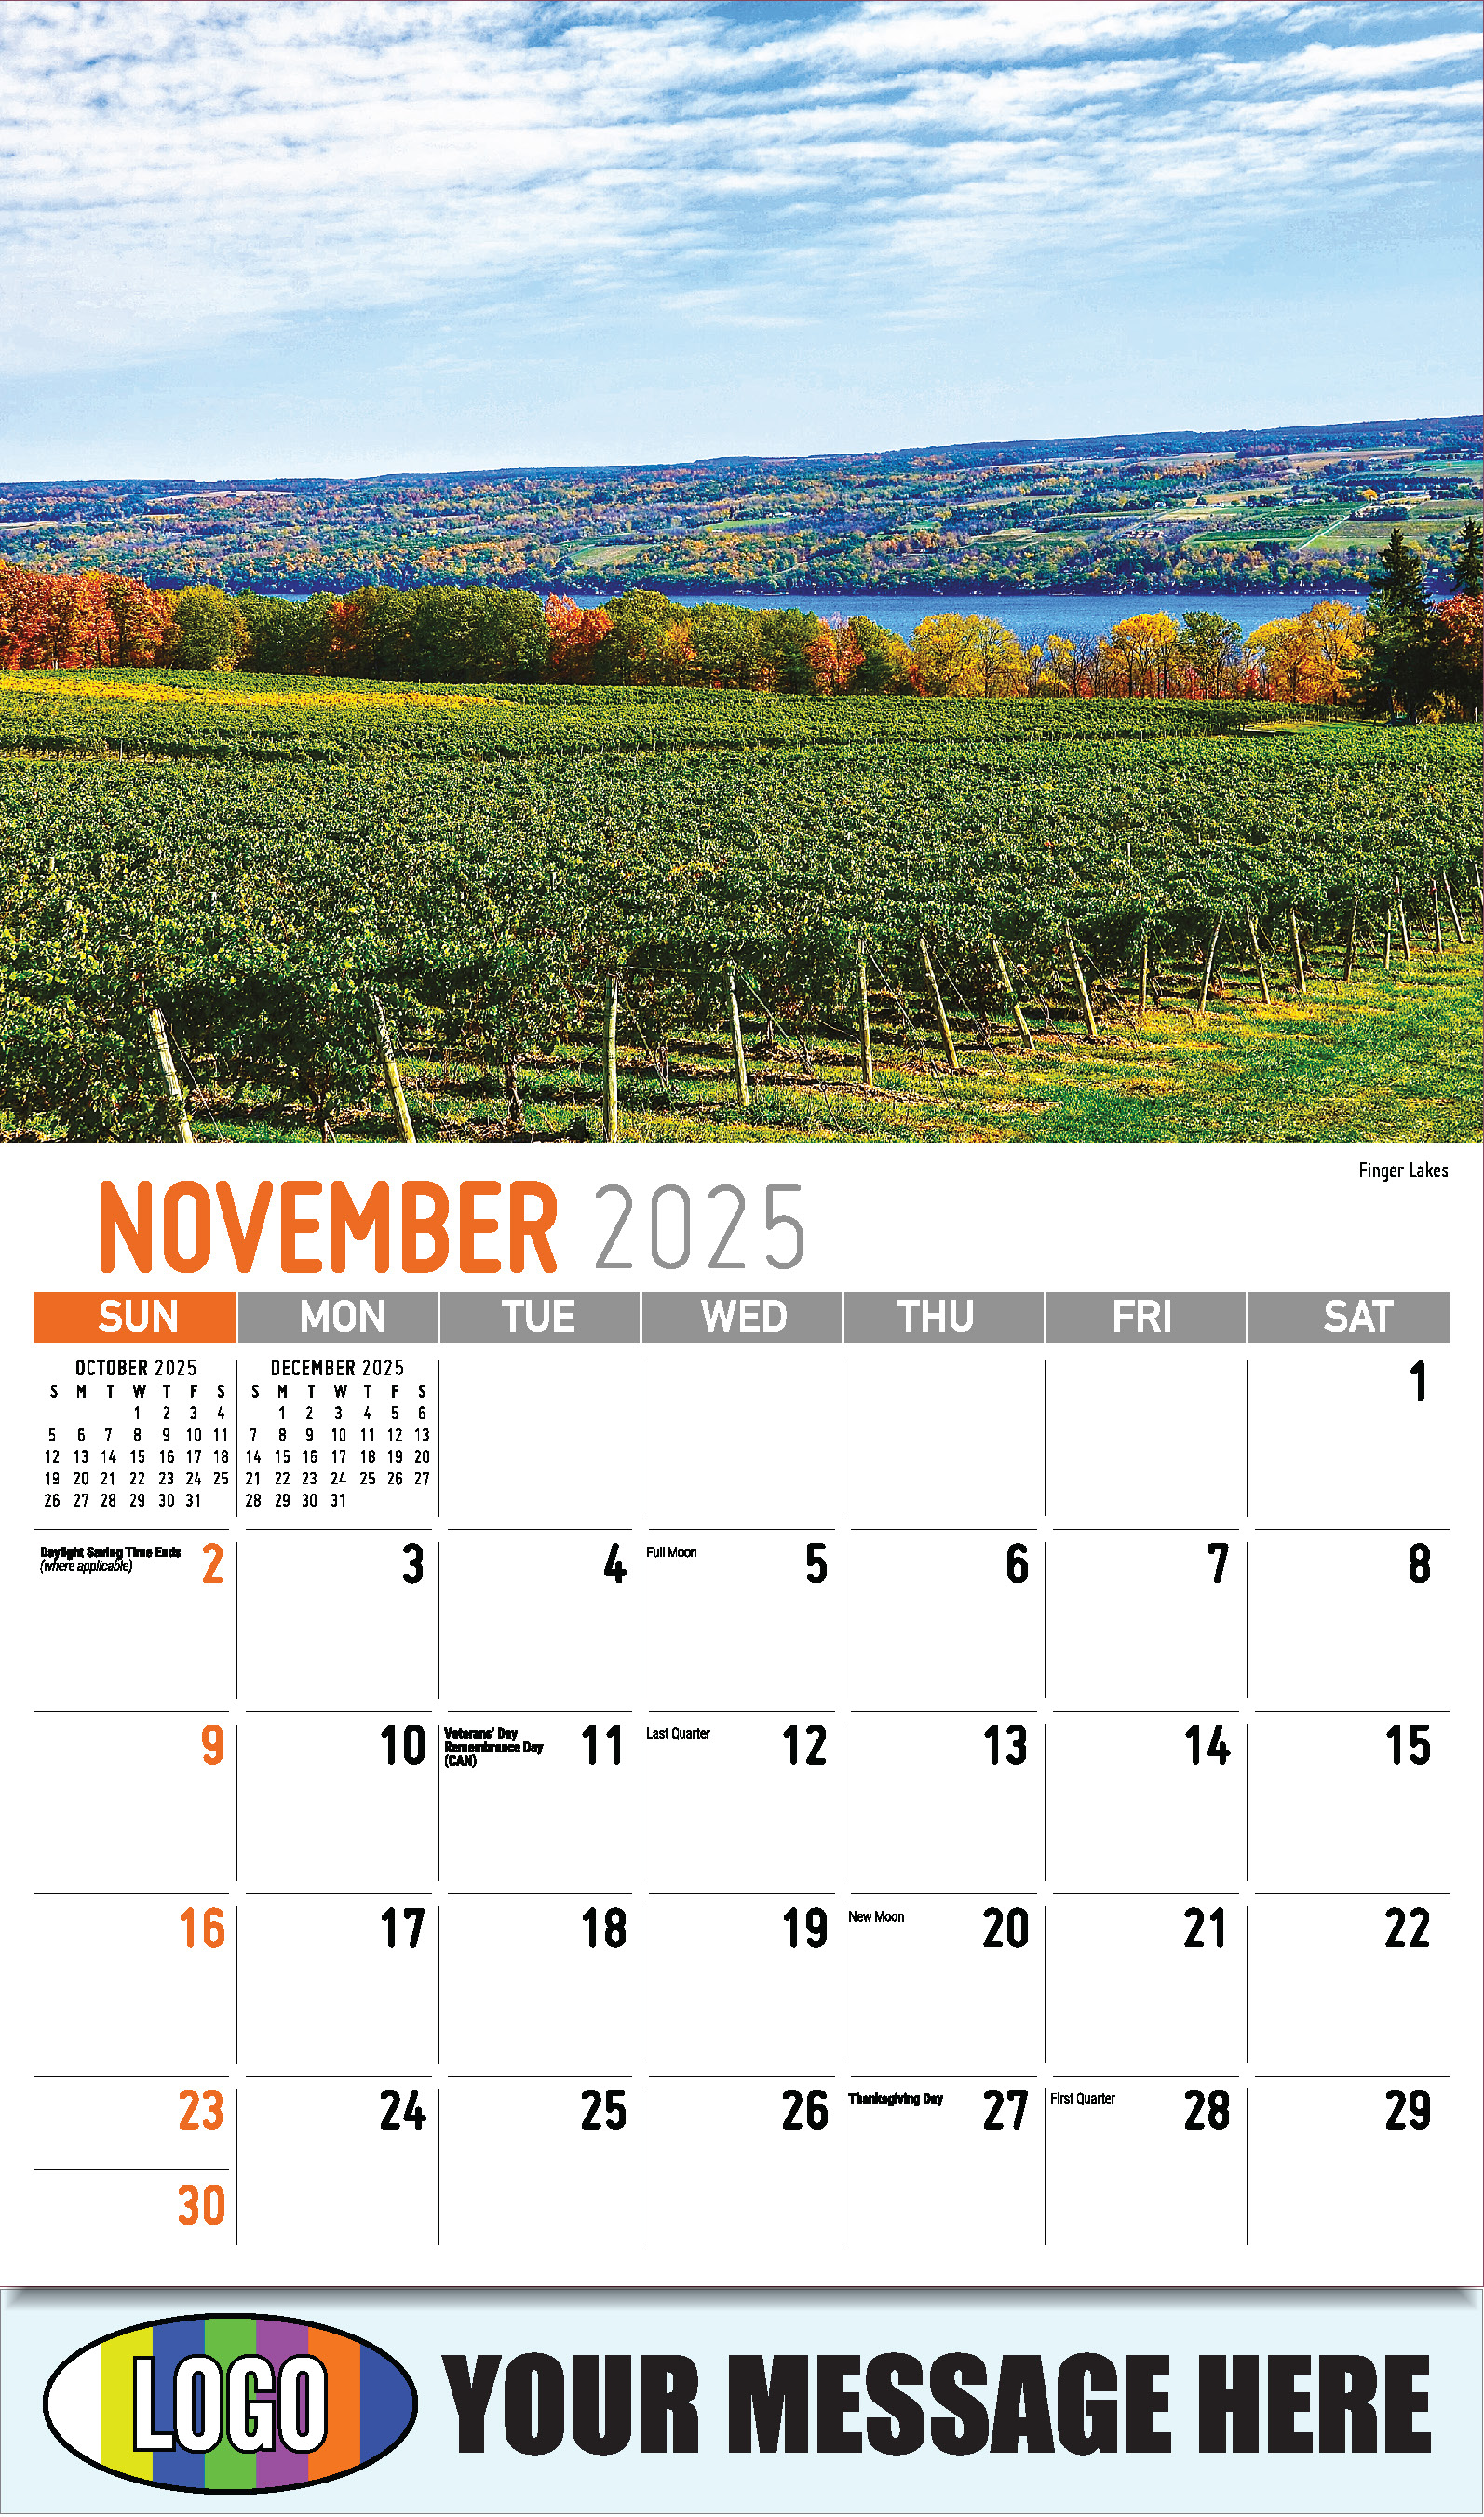 Scenes of New York 2025 Business Promotional Wall Calendar - November